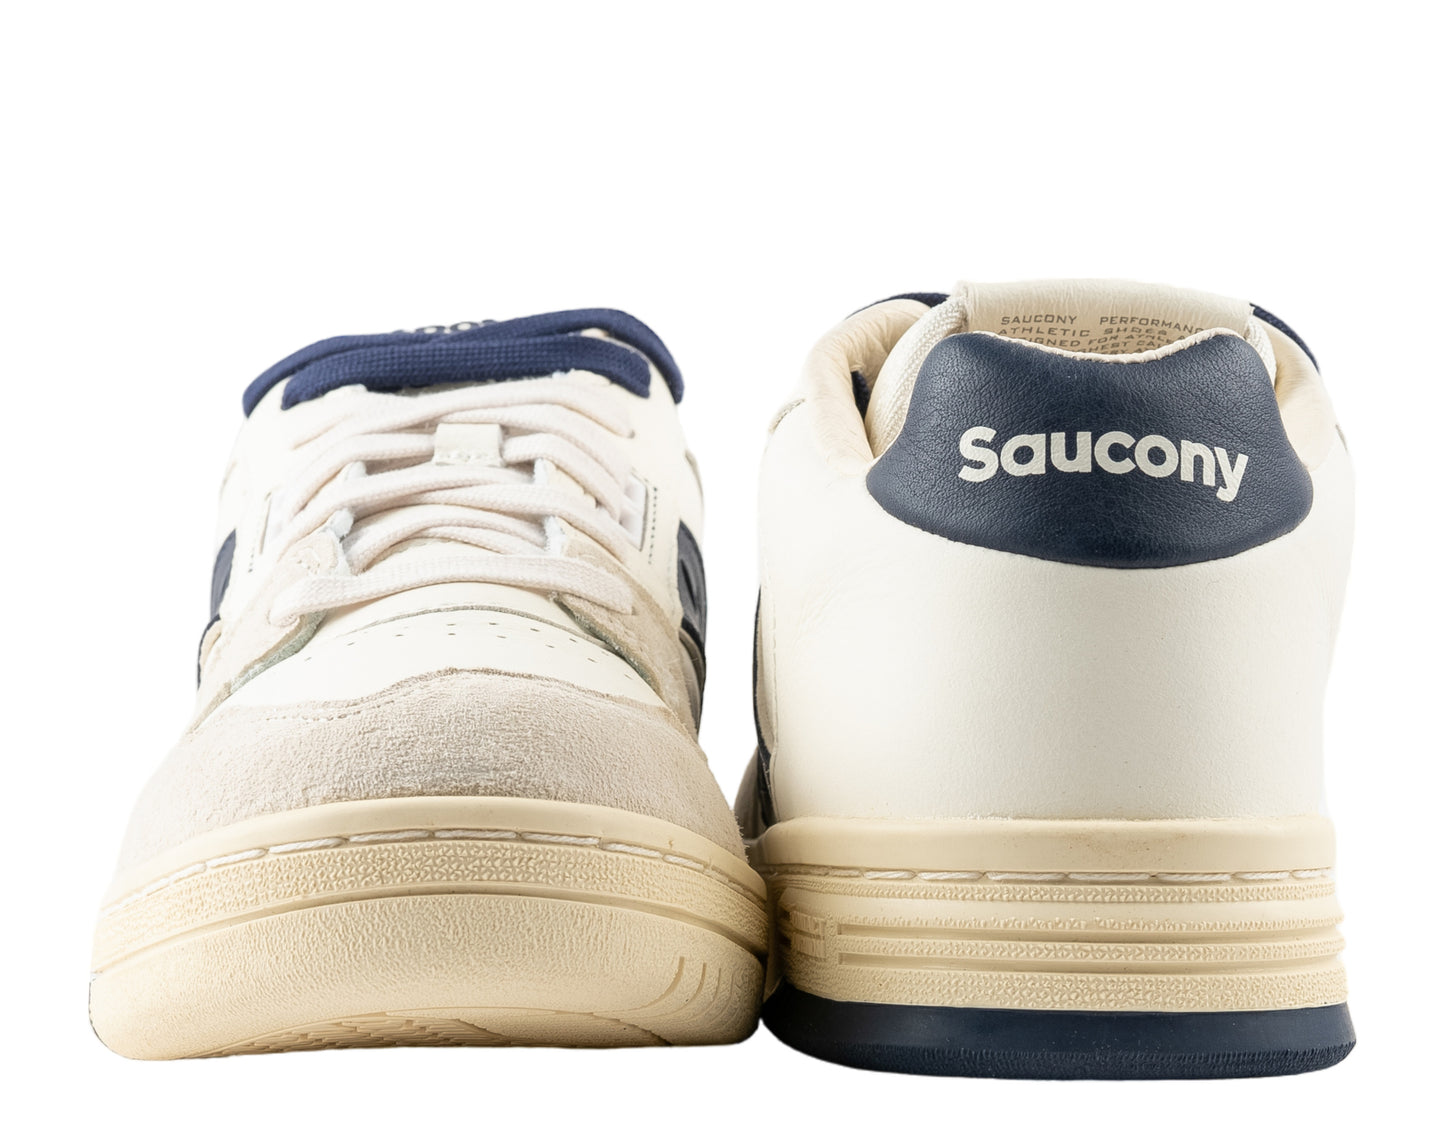 Saucony Originals Spot-Bilt™ Sonic Low Premium Shoes